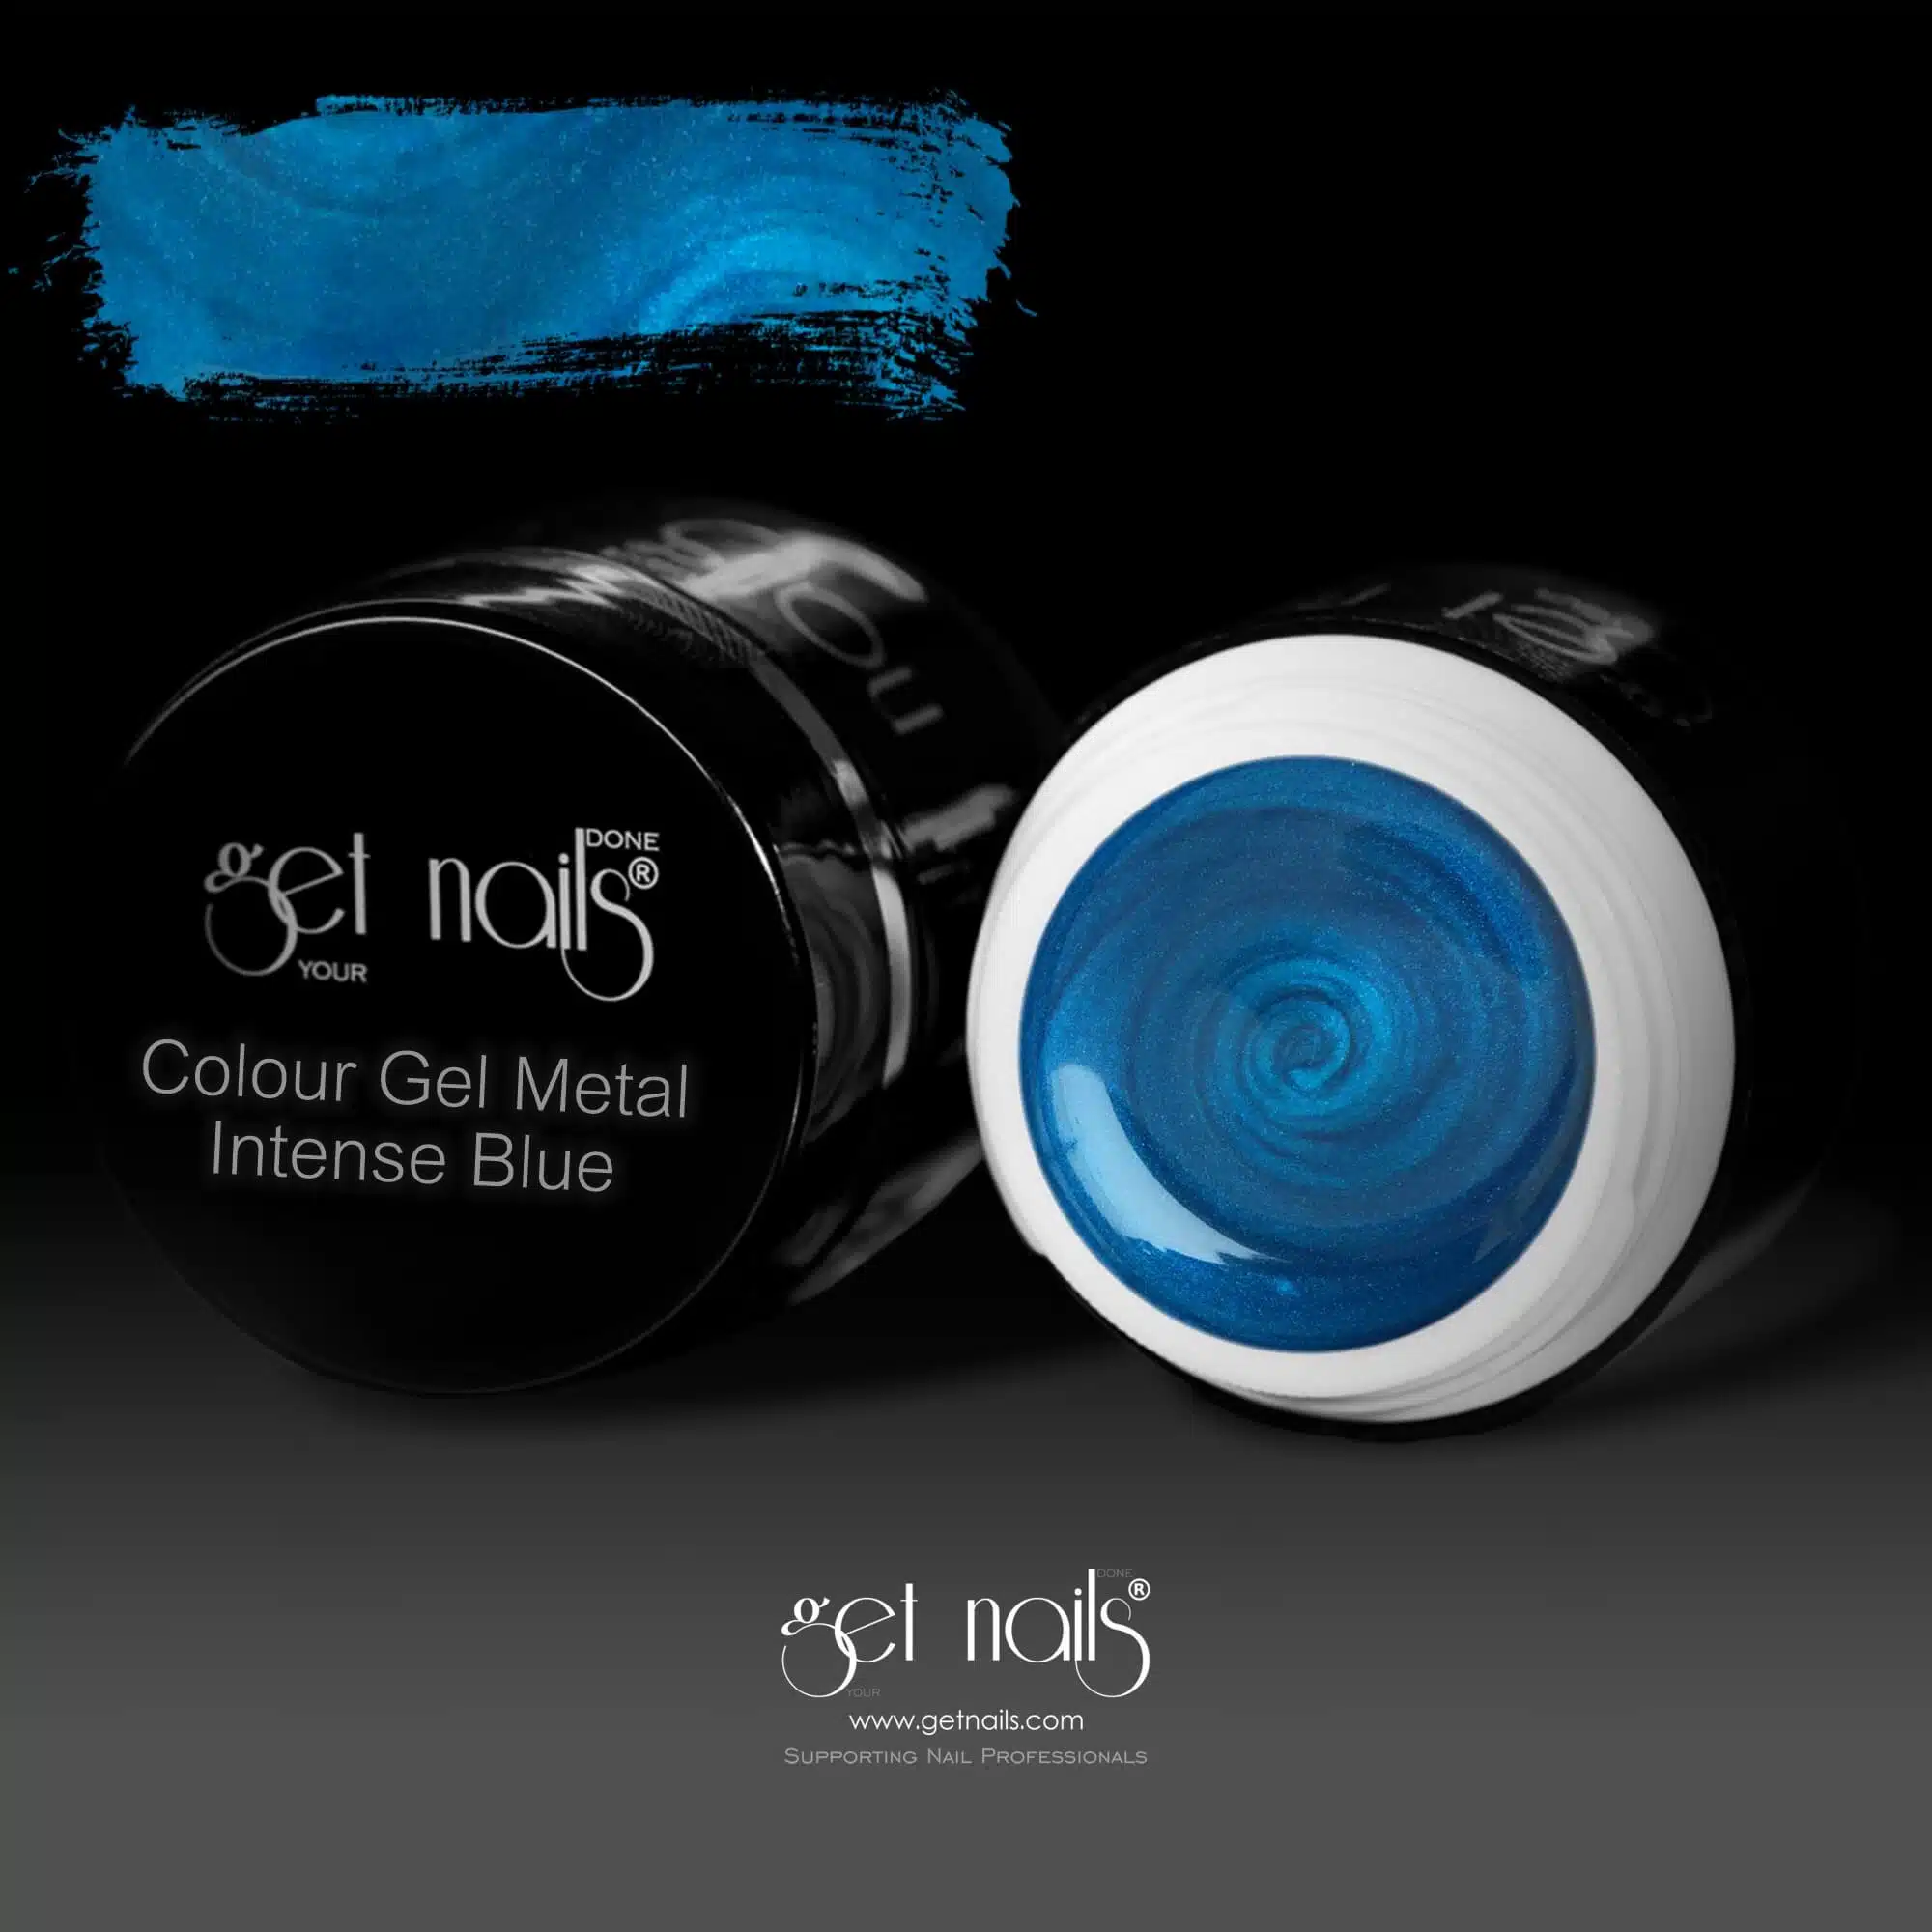 Get Nails Austria - Color Gel Metal Intense Blue 5g